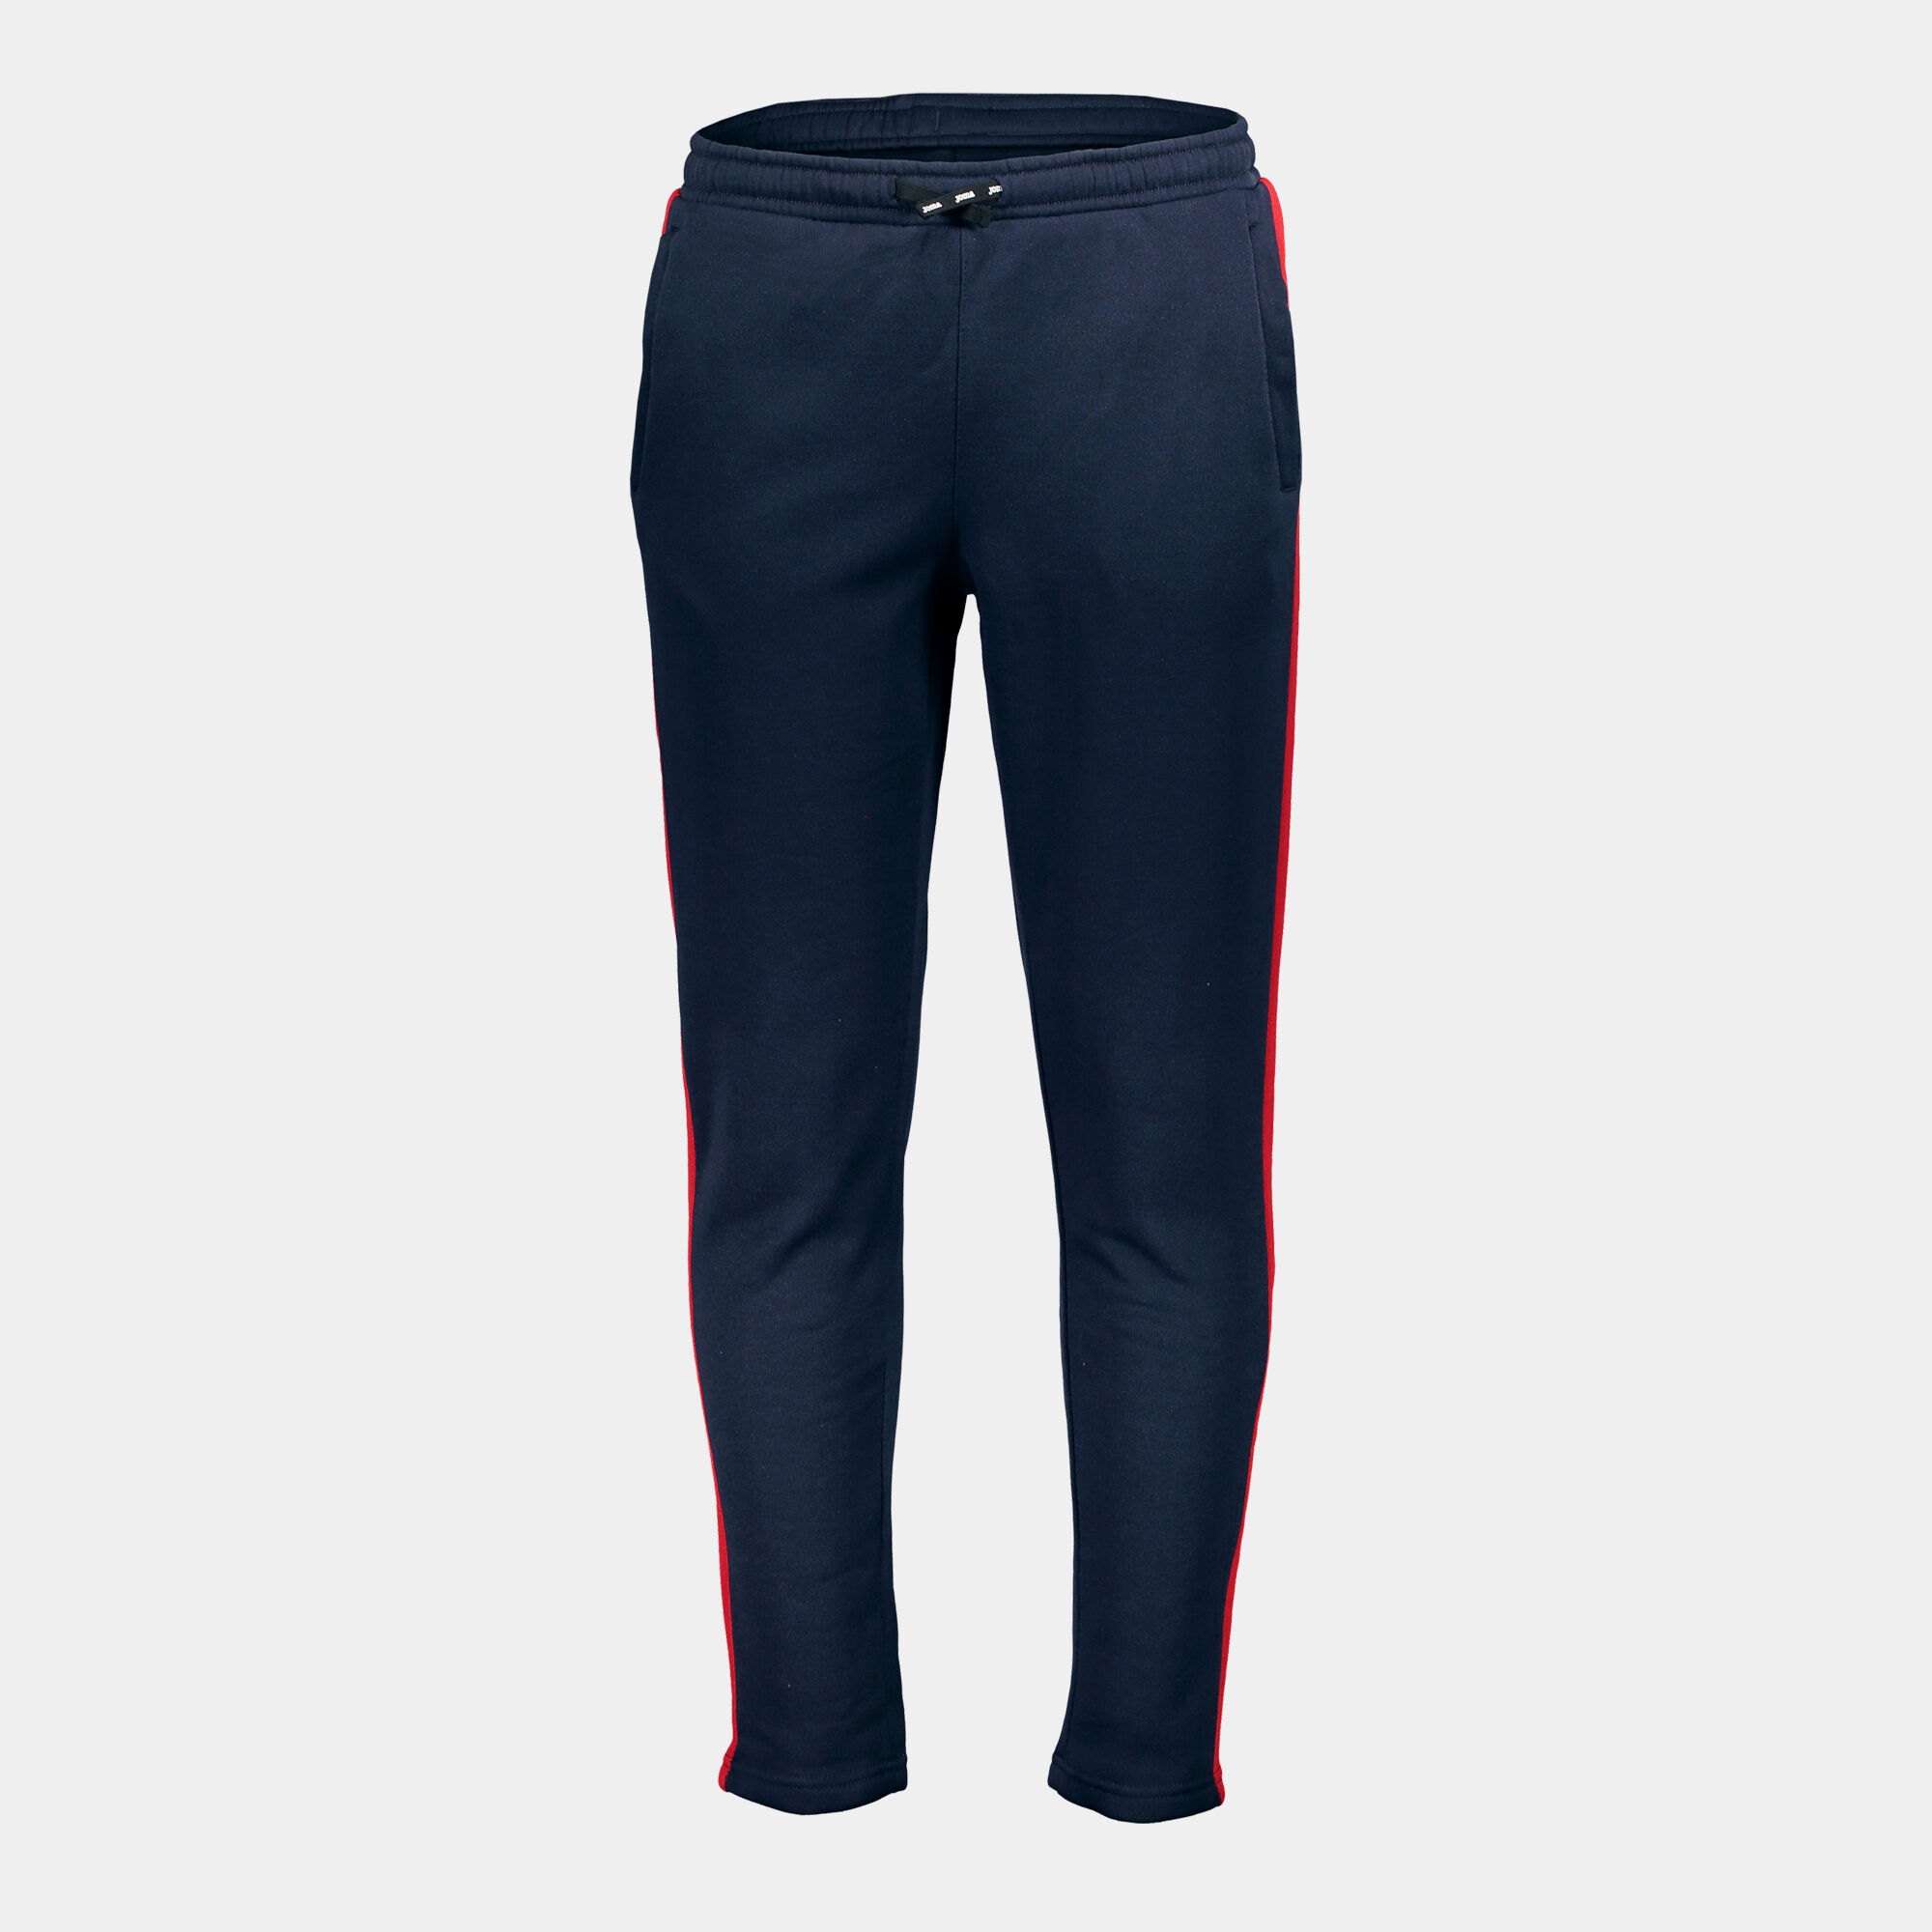 Pantalone lungo uomo Stripe blu navy rosso